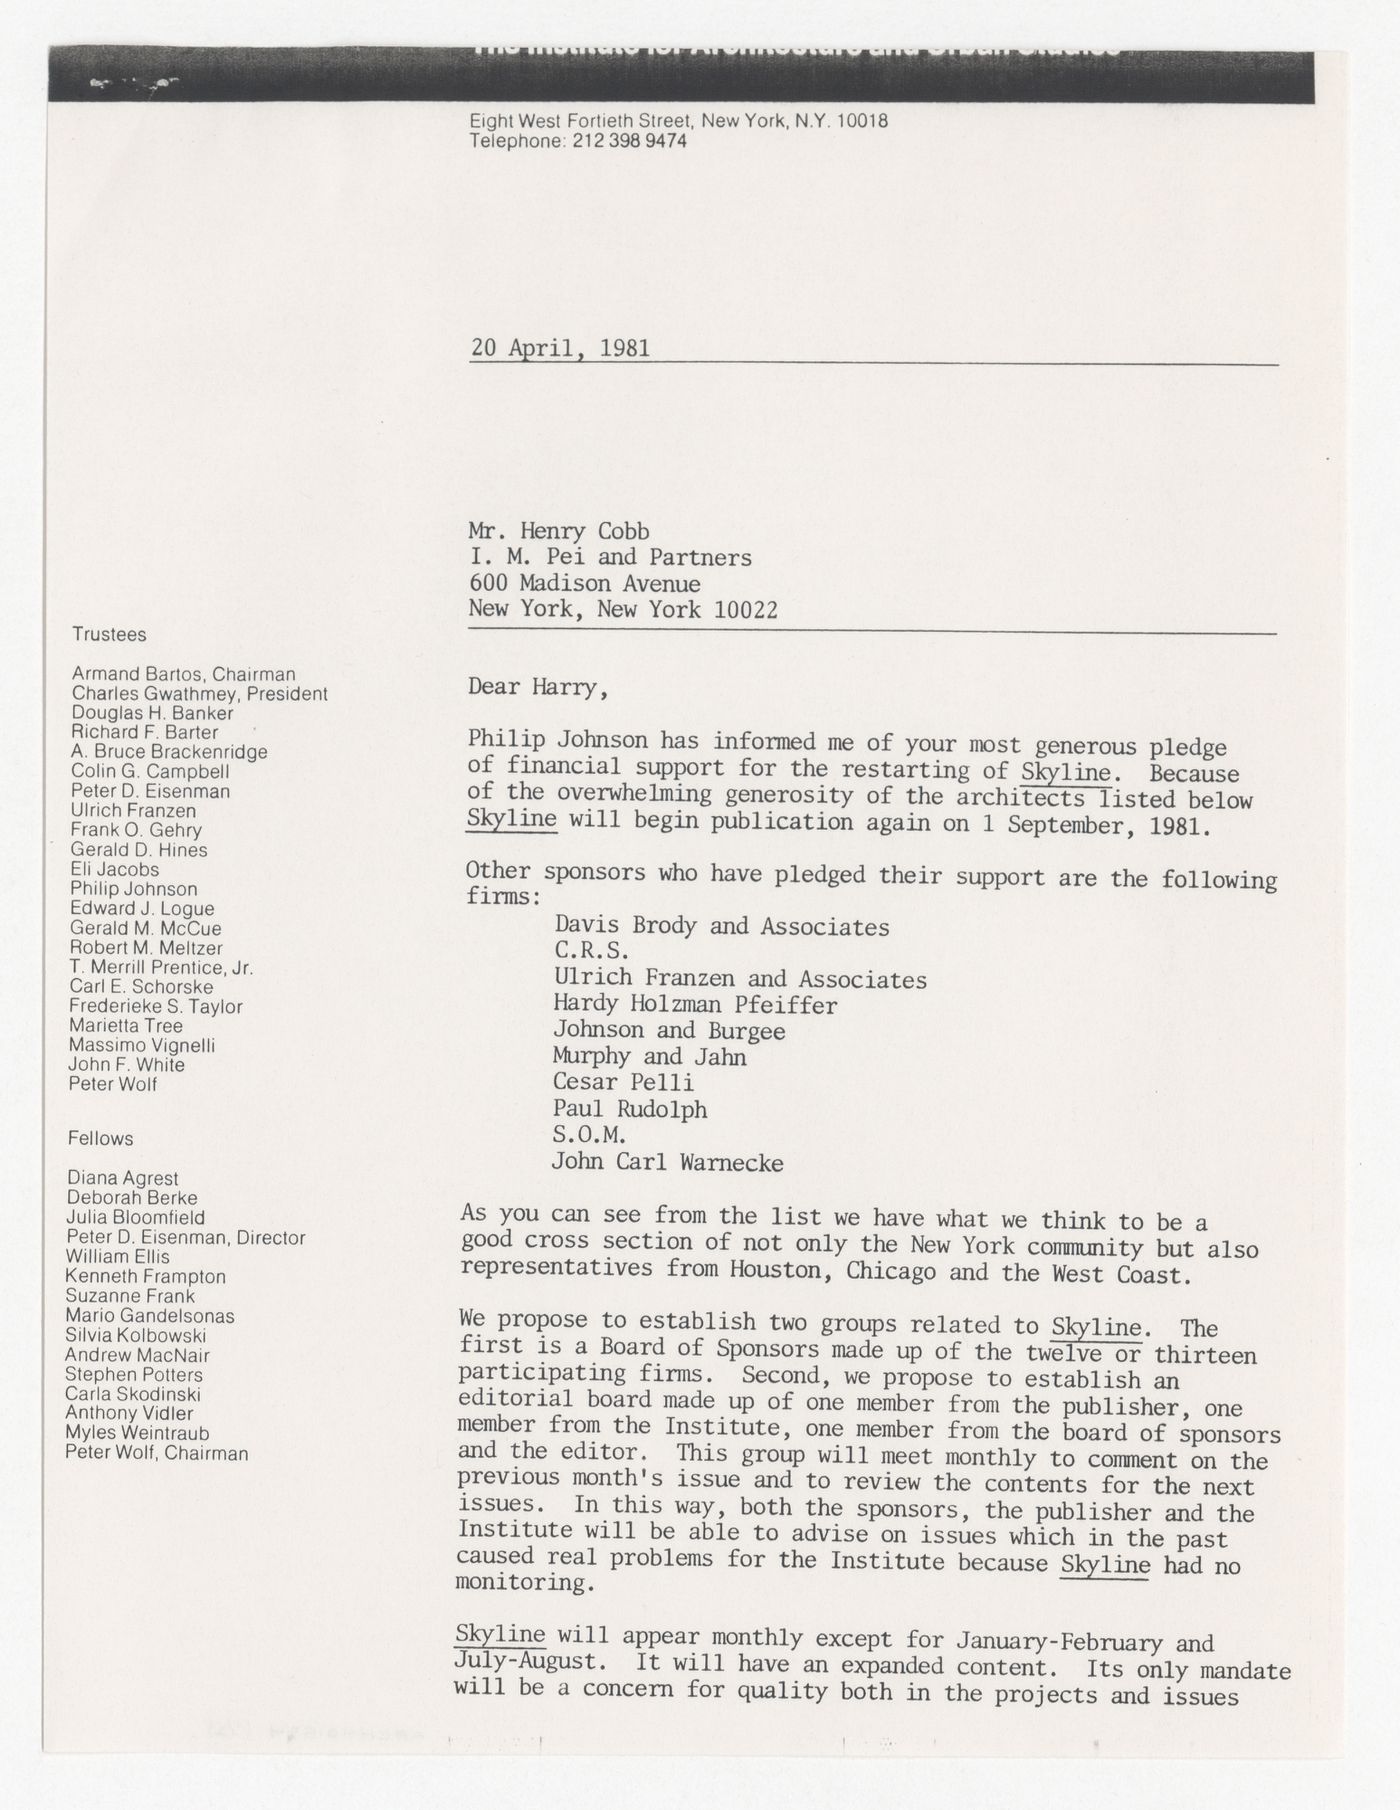 Letter from Peter D. Eisenman to Henry N. Cobb about sponsorship for Skyline